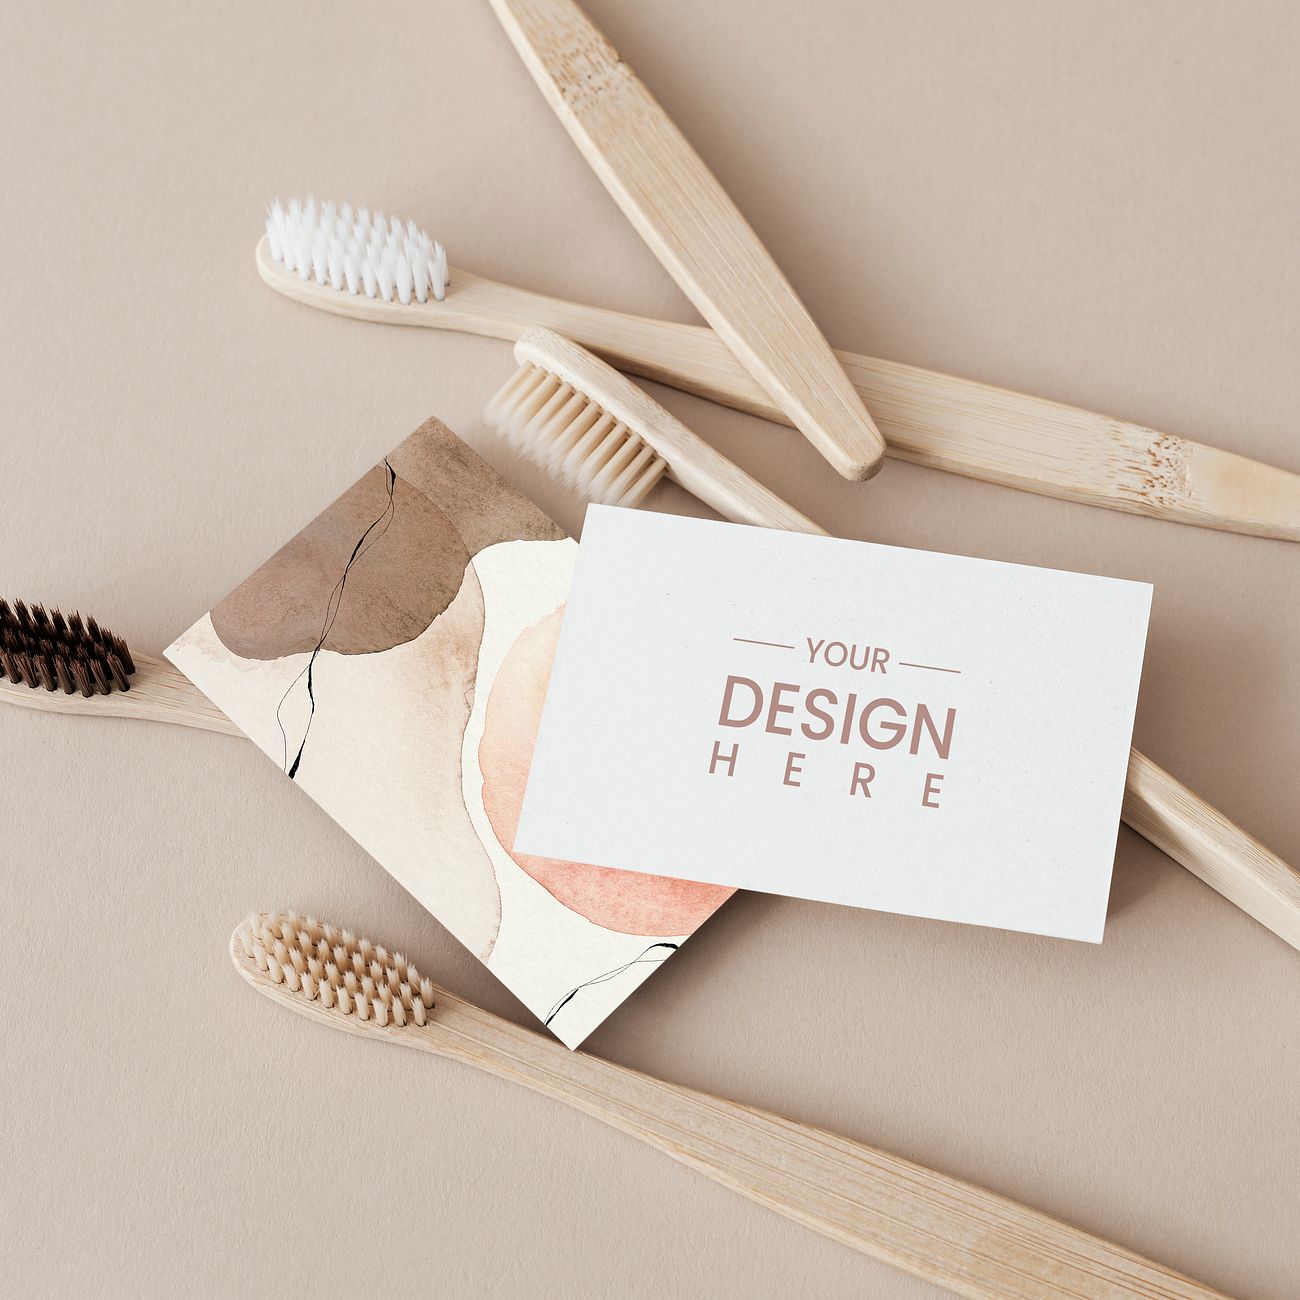 Download Bamboo toothbrushes and design card mockup | Royalty free psd mockup - 2258526